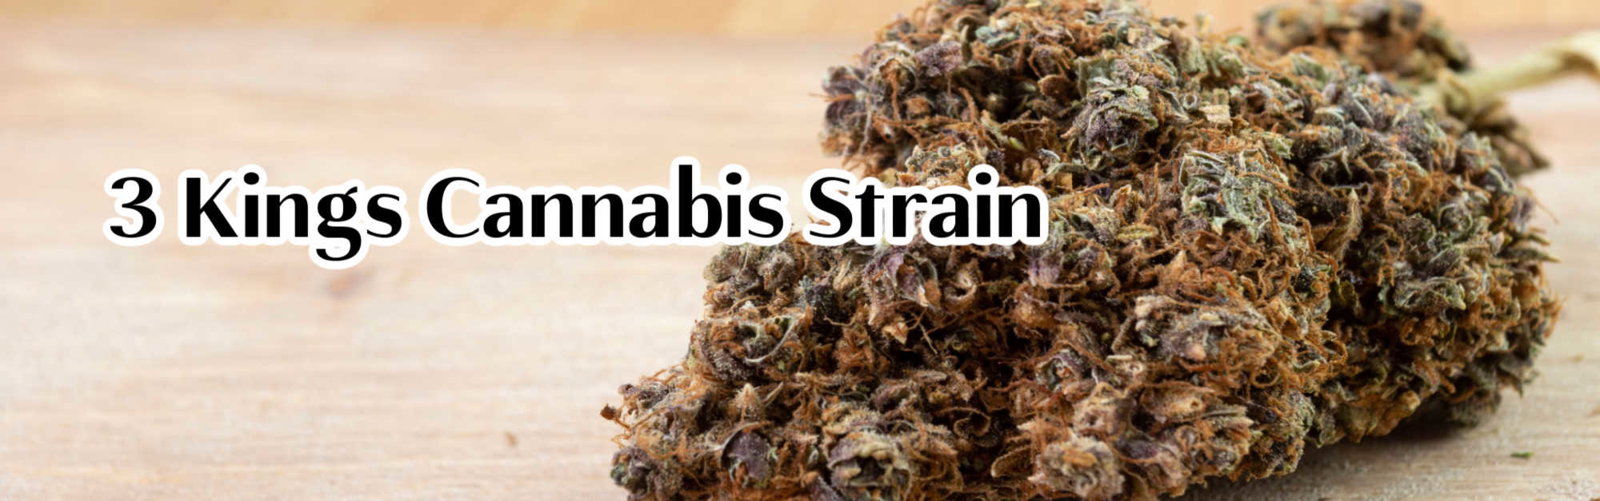 image of 3 Kings Cannabis Strain